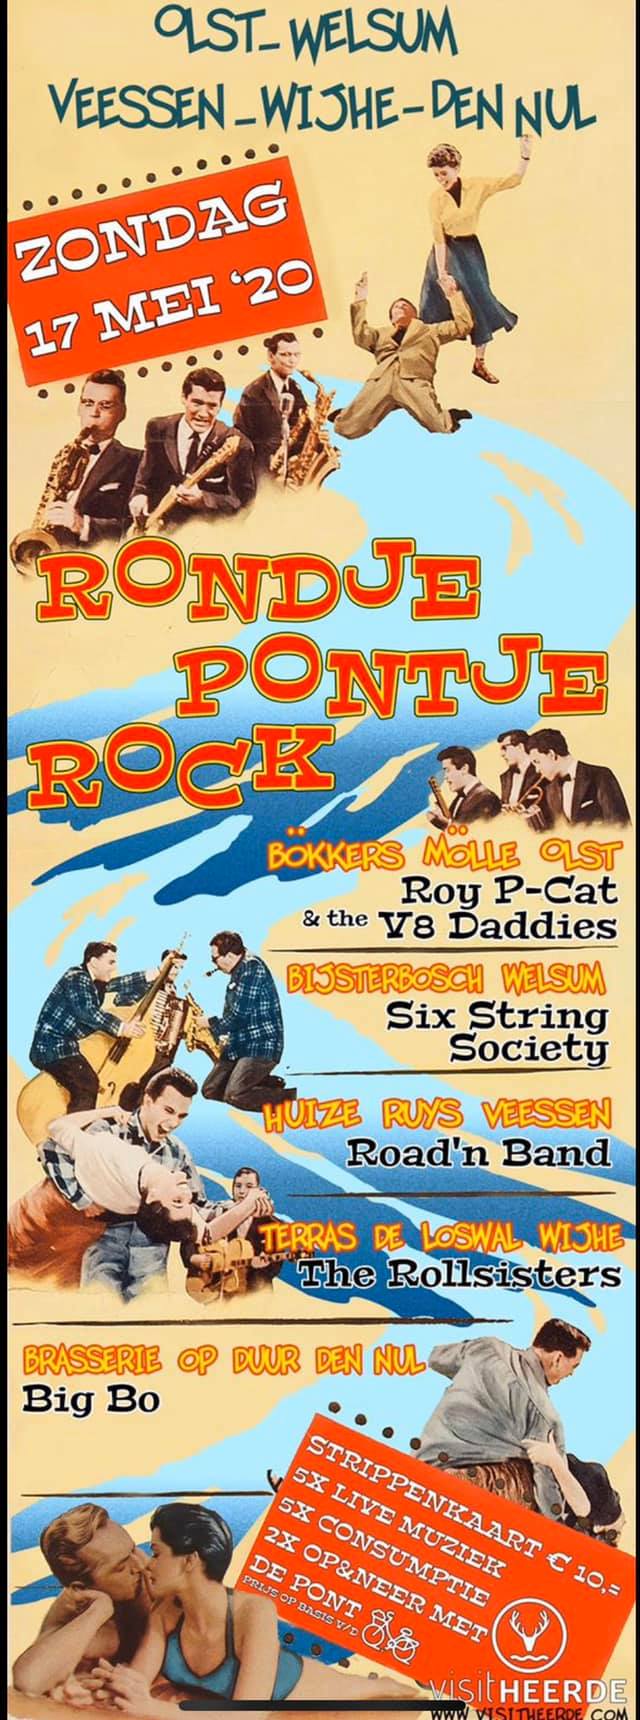 Rondje Pontje Rock Festival